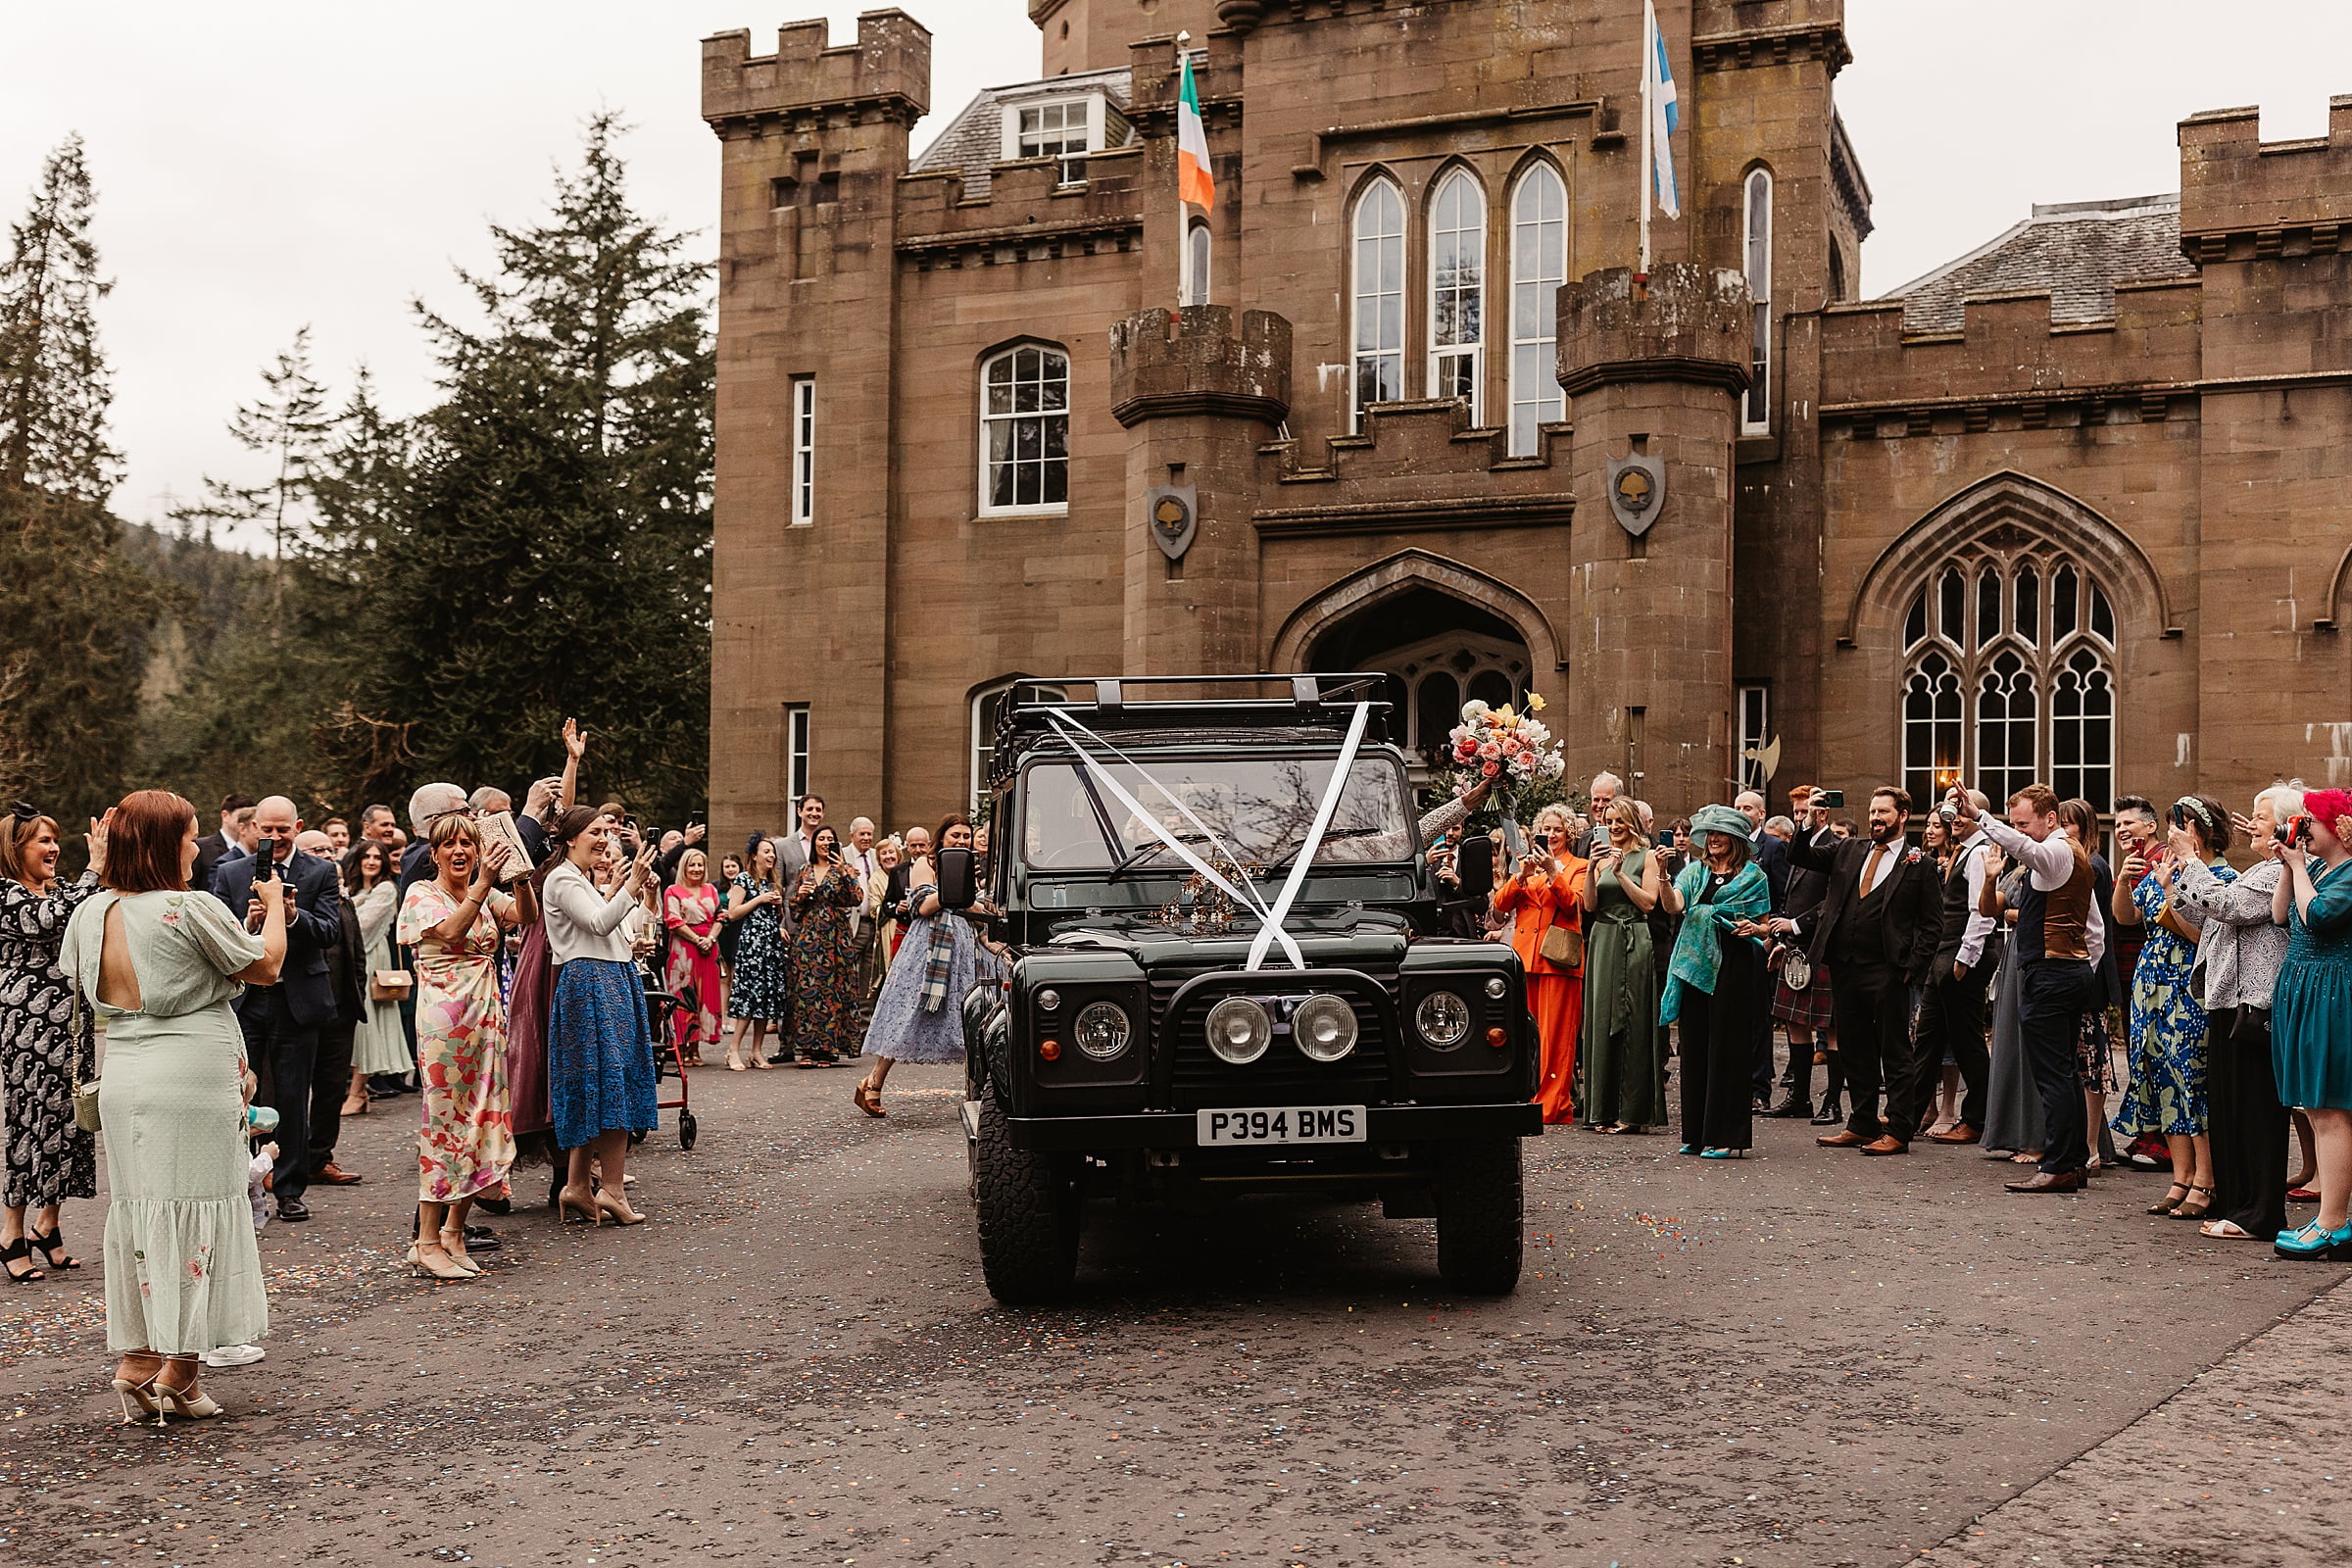 Drumtochty castle wedding photos landrover wedding car exit